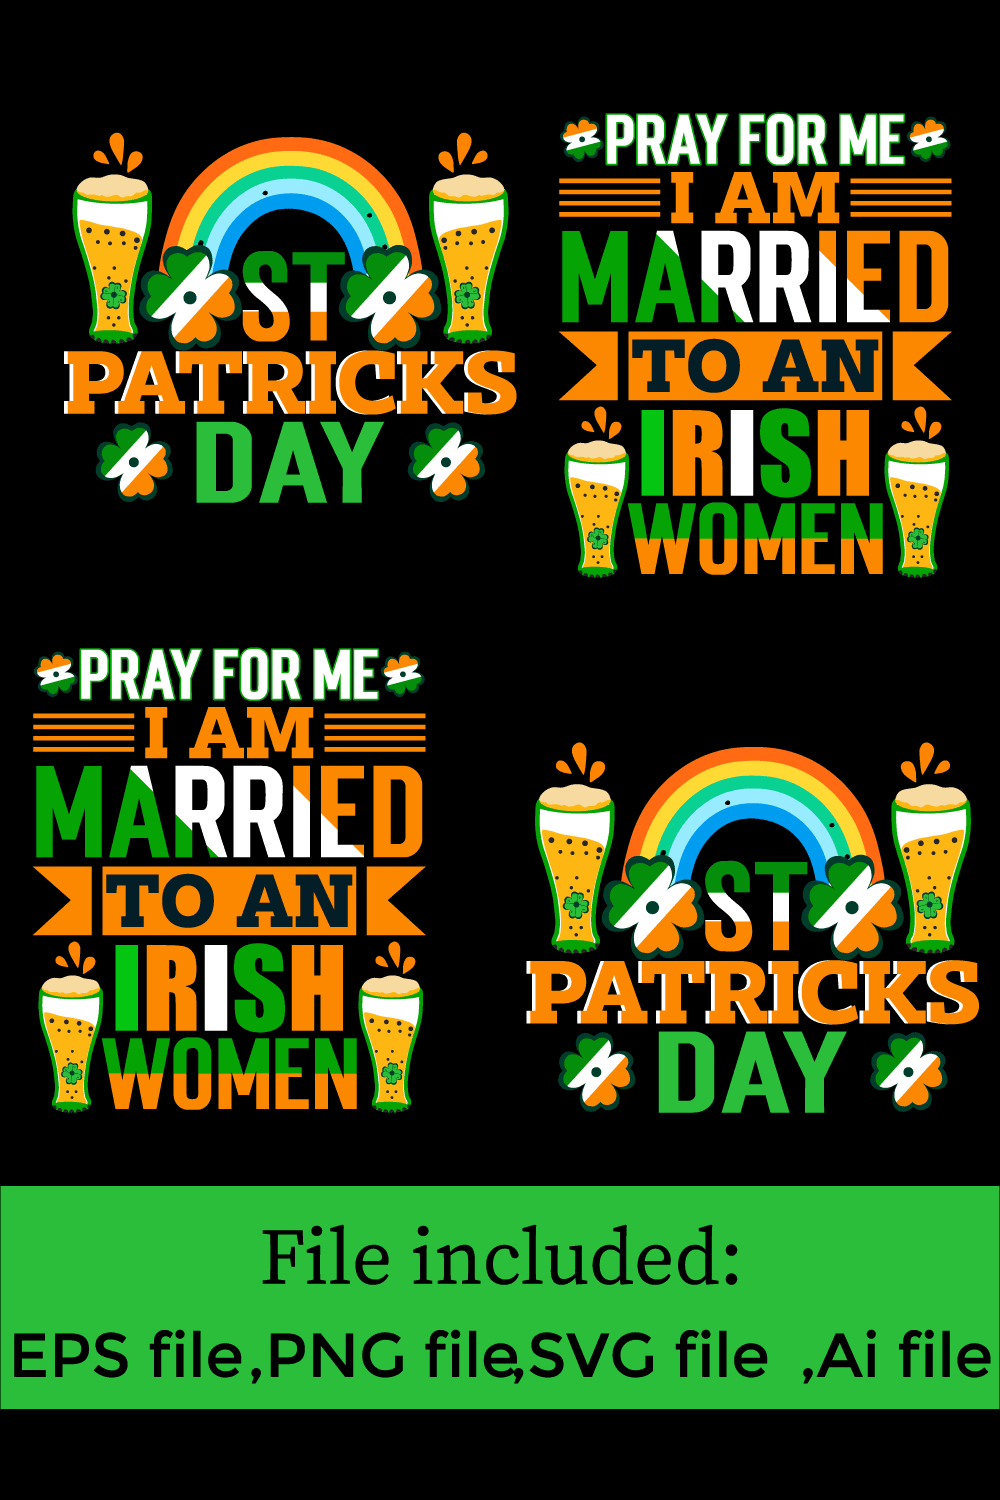 St Patricks day t-shirt design  pinterest preview image.